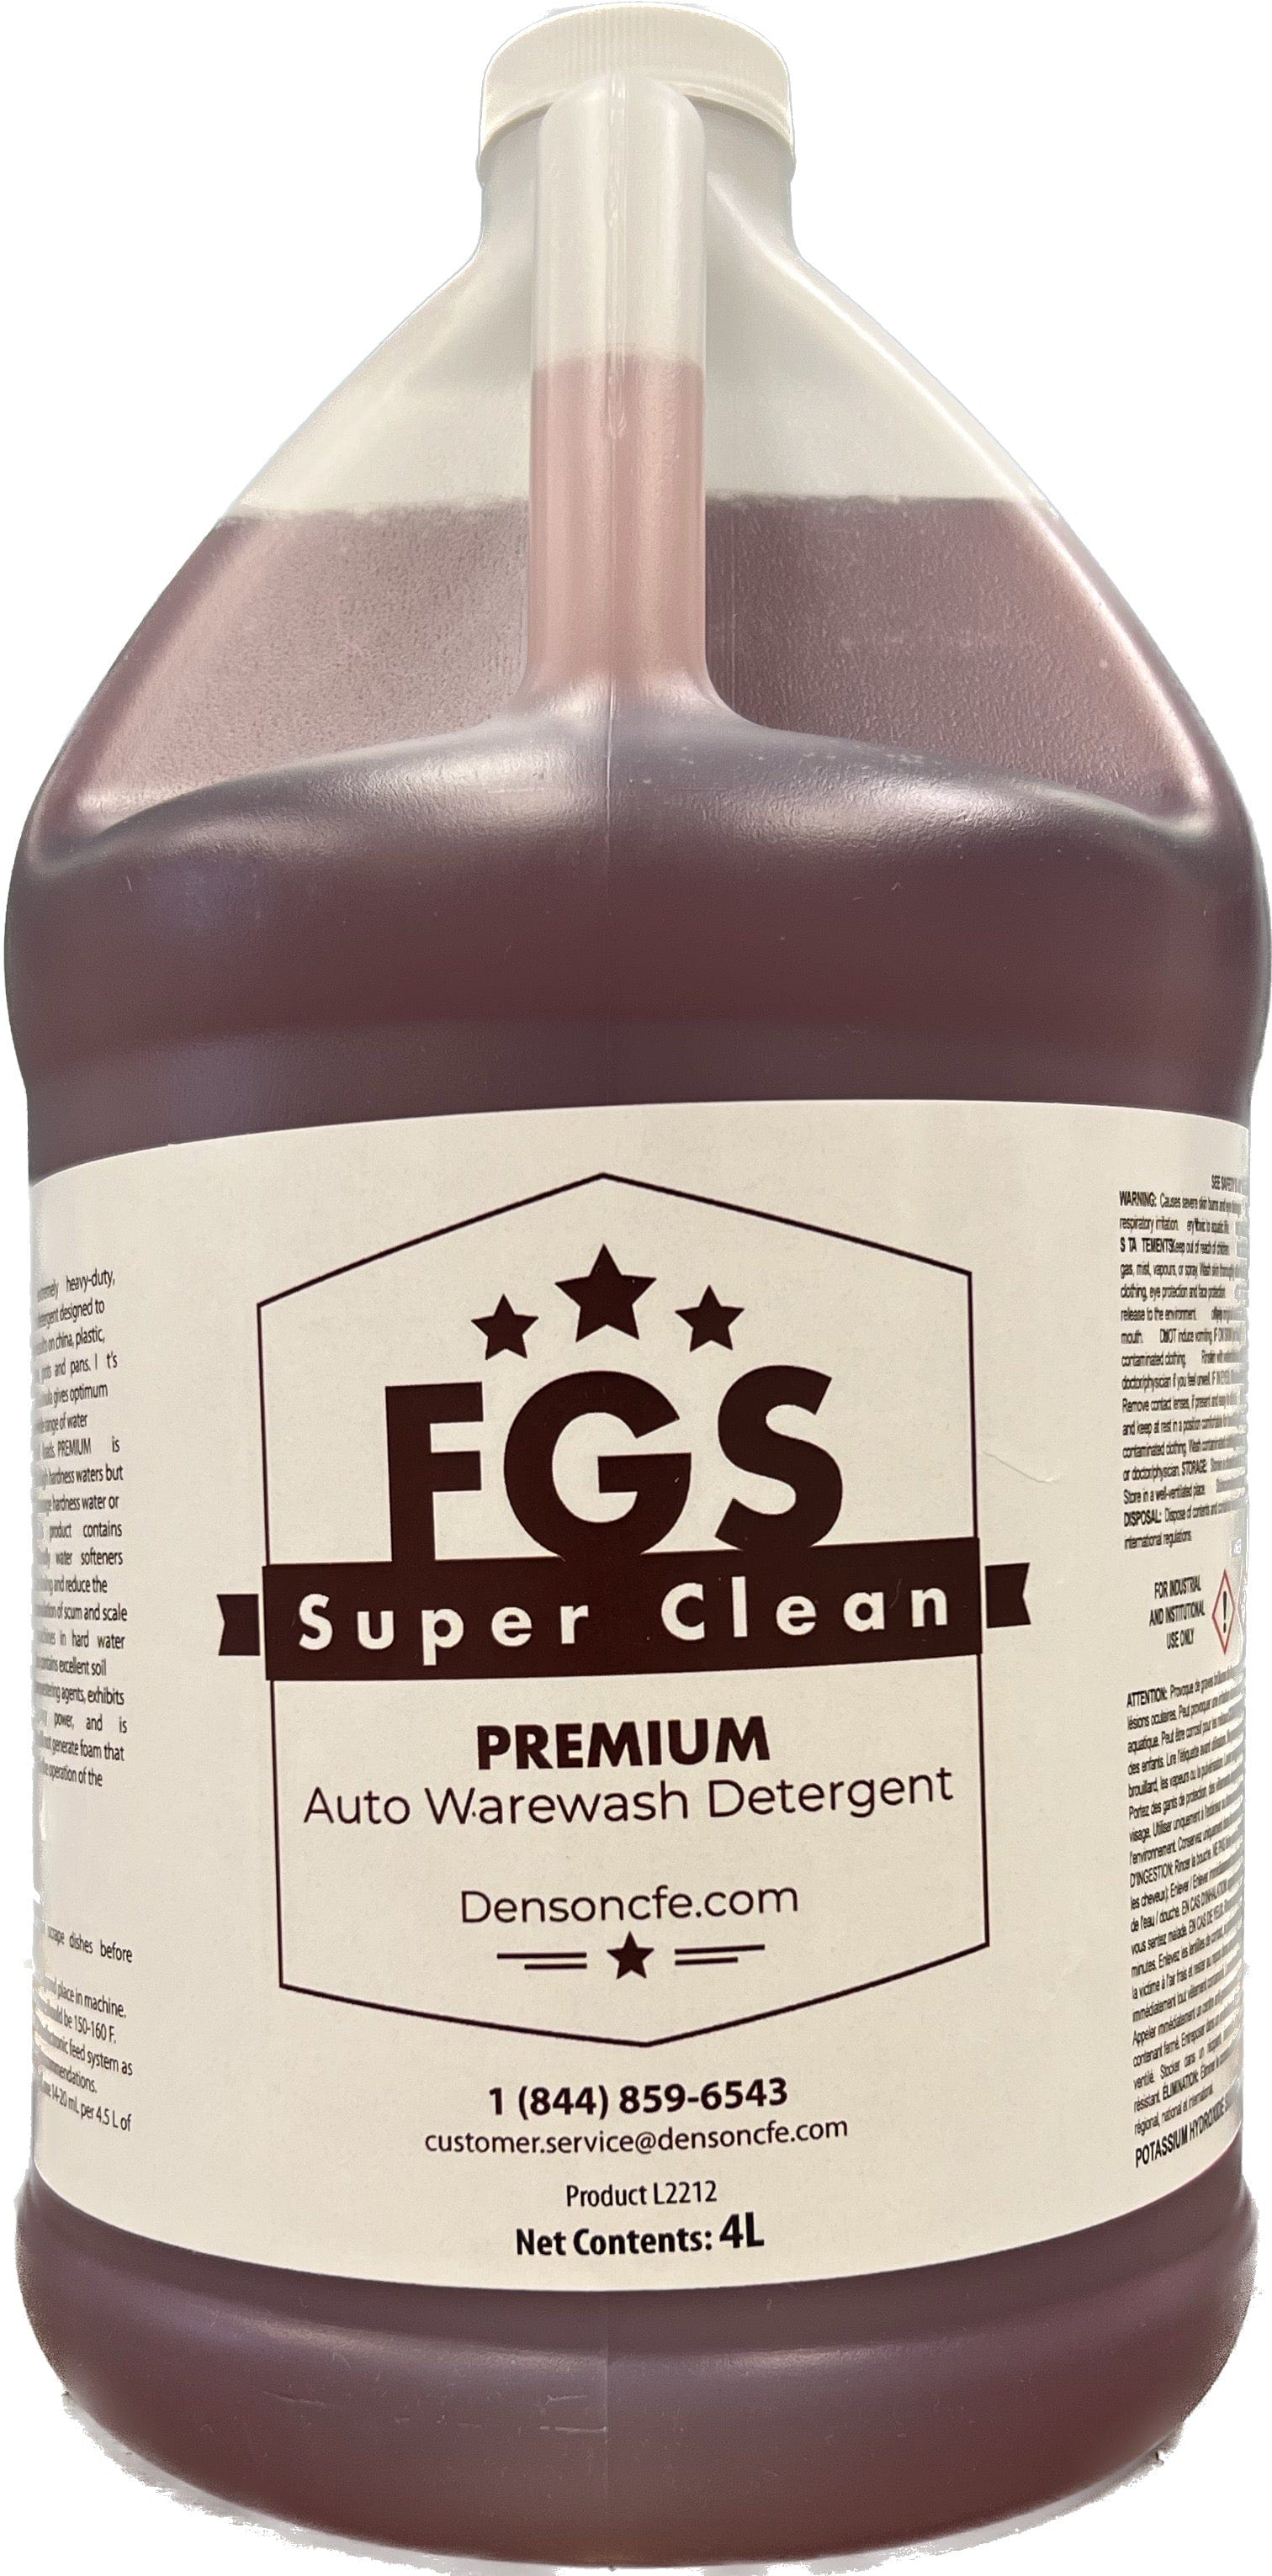 FGS Superclean Food Service Supplies Each Premium warewash detergent suitable for hard water 4 litre